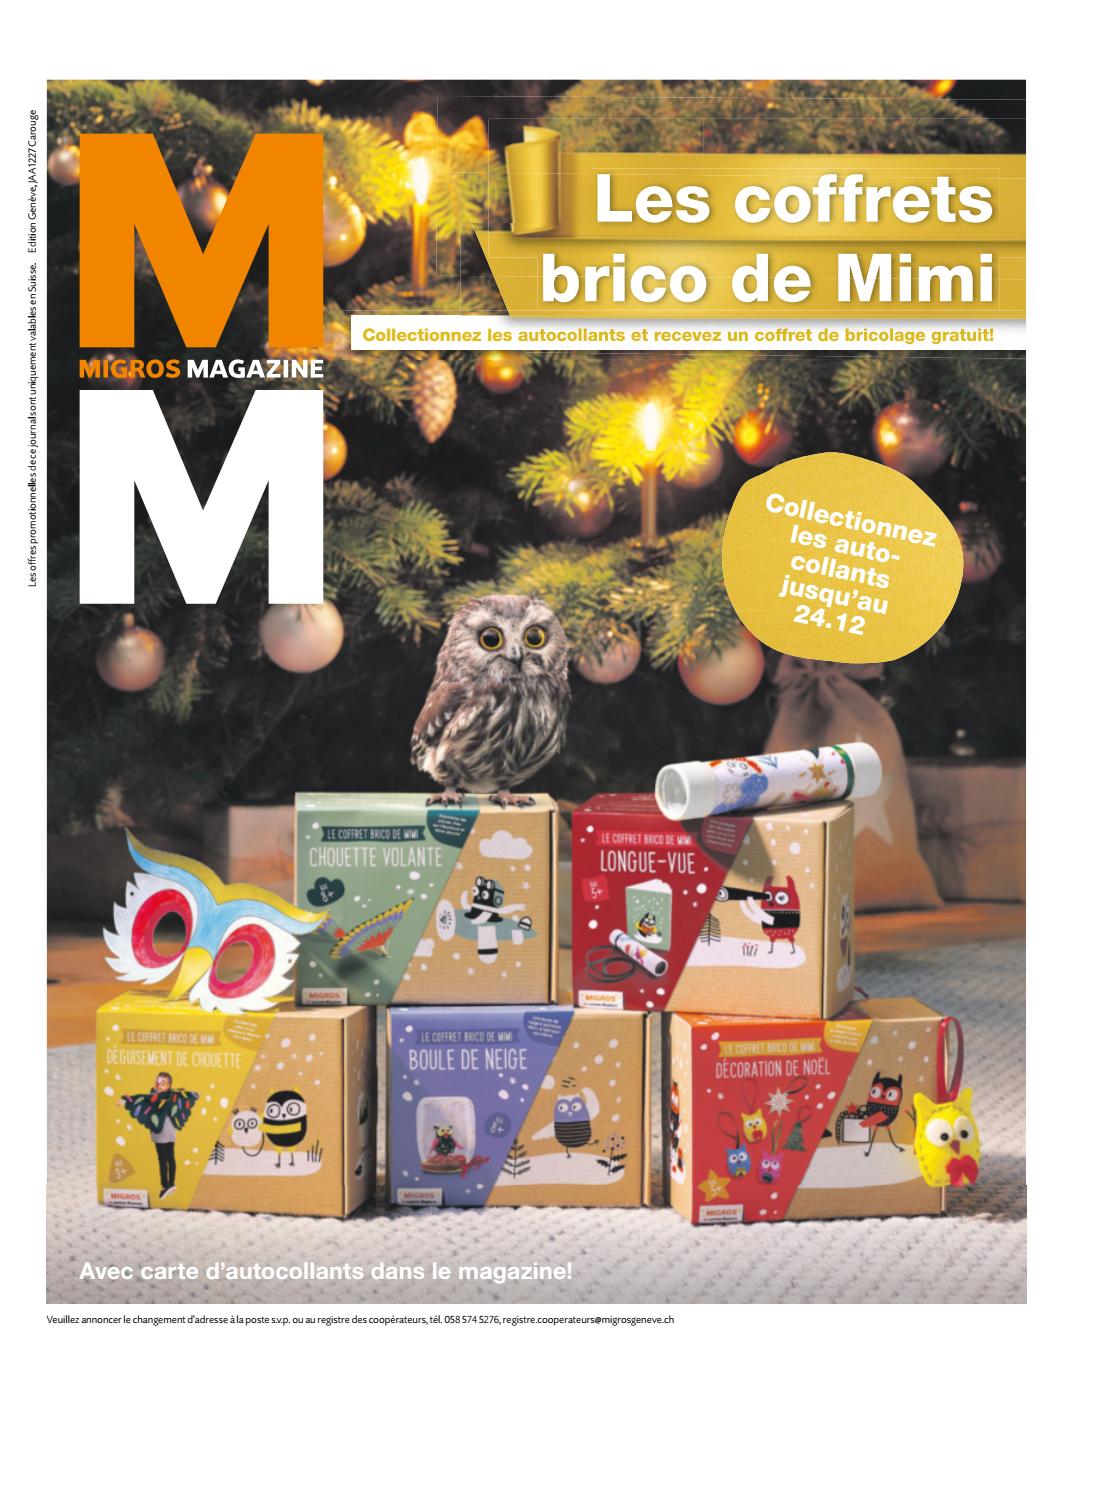 Carte Cadeau Brico Depot Élégant Migros Magazin 47 2019 F Ge by Migros Genossenschafts Bund